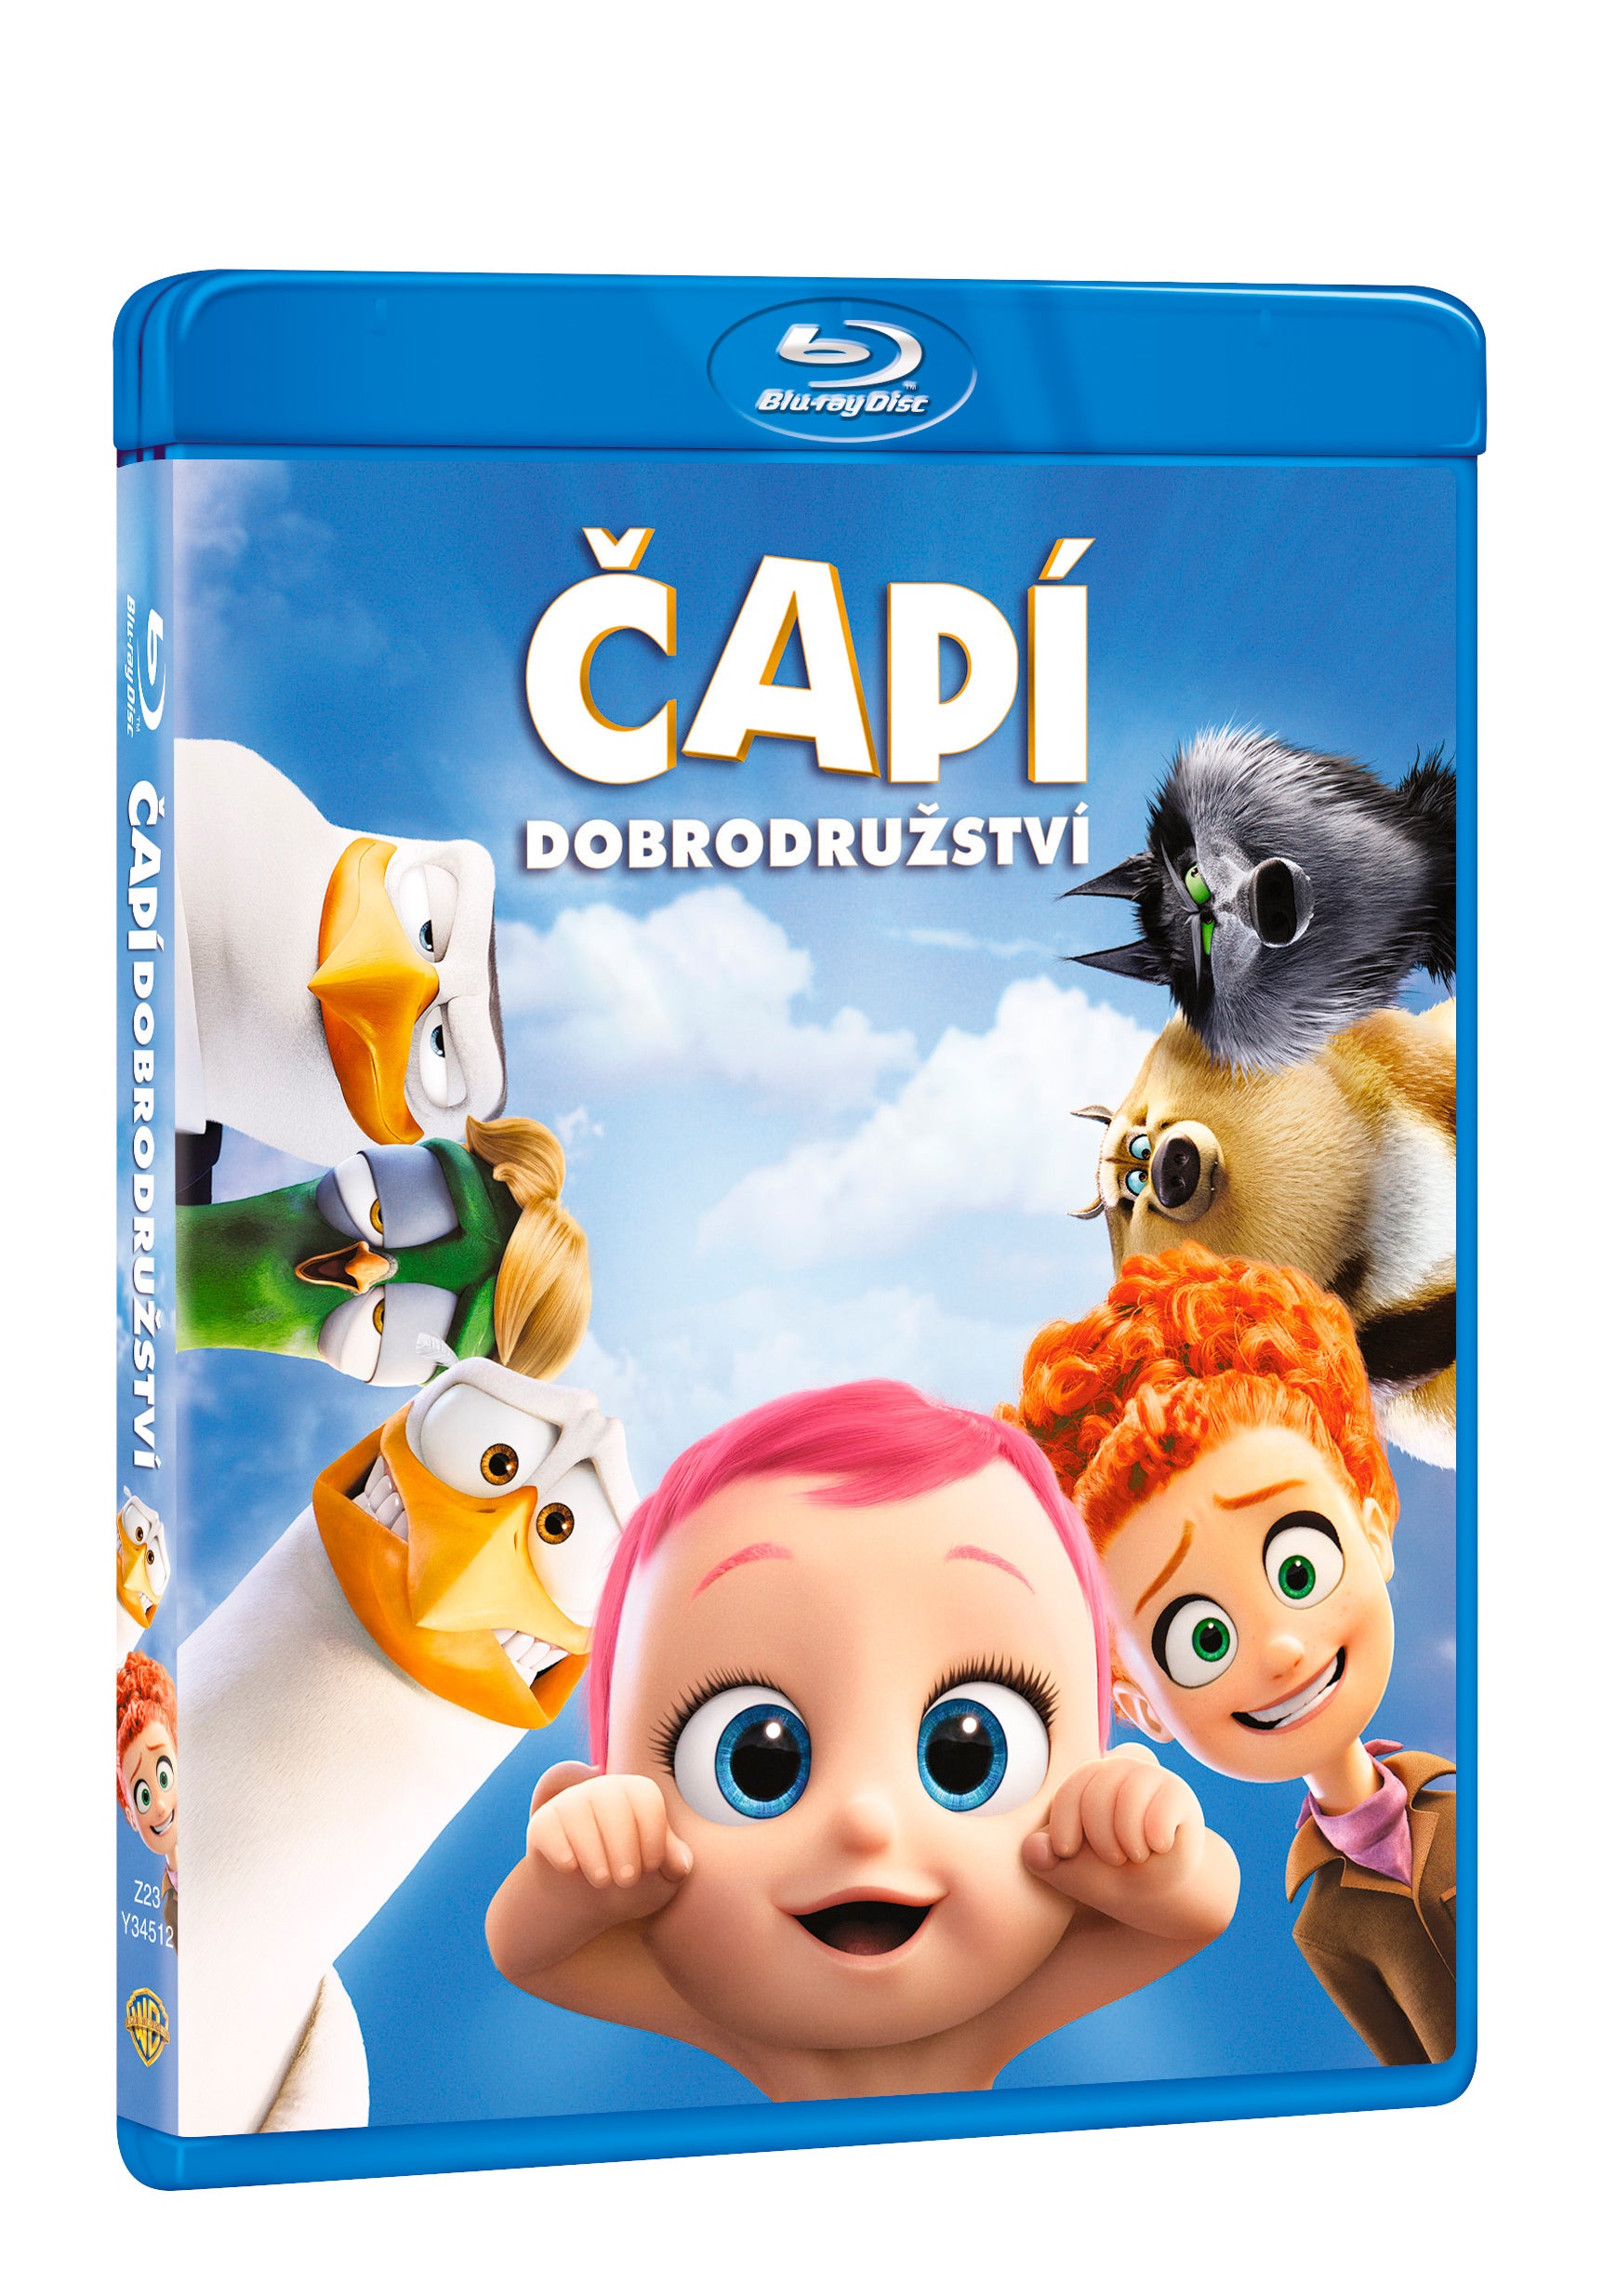 Capi dobrodruzstvi BD / Storks - Czech version